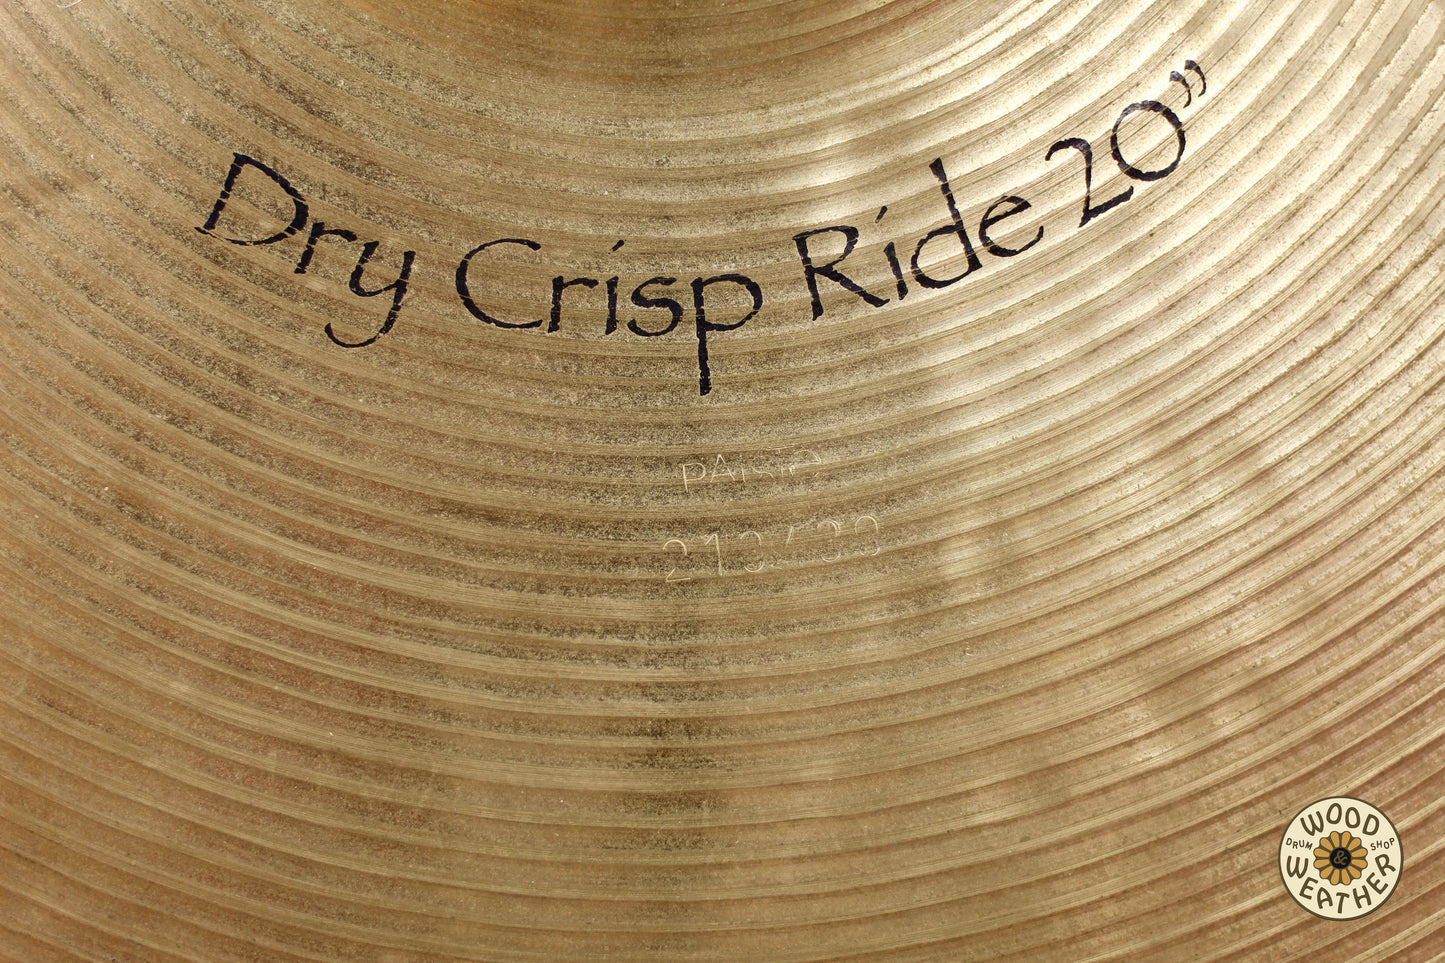 Paiste Signature Dry Crisp 20" Ride Cymbal 2320g